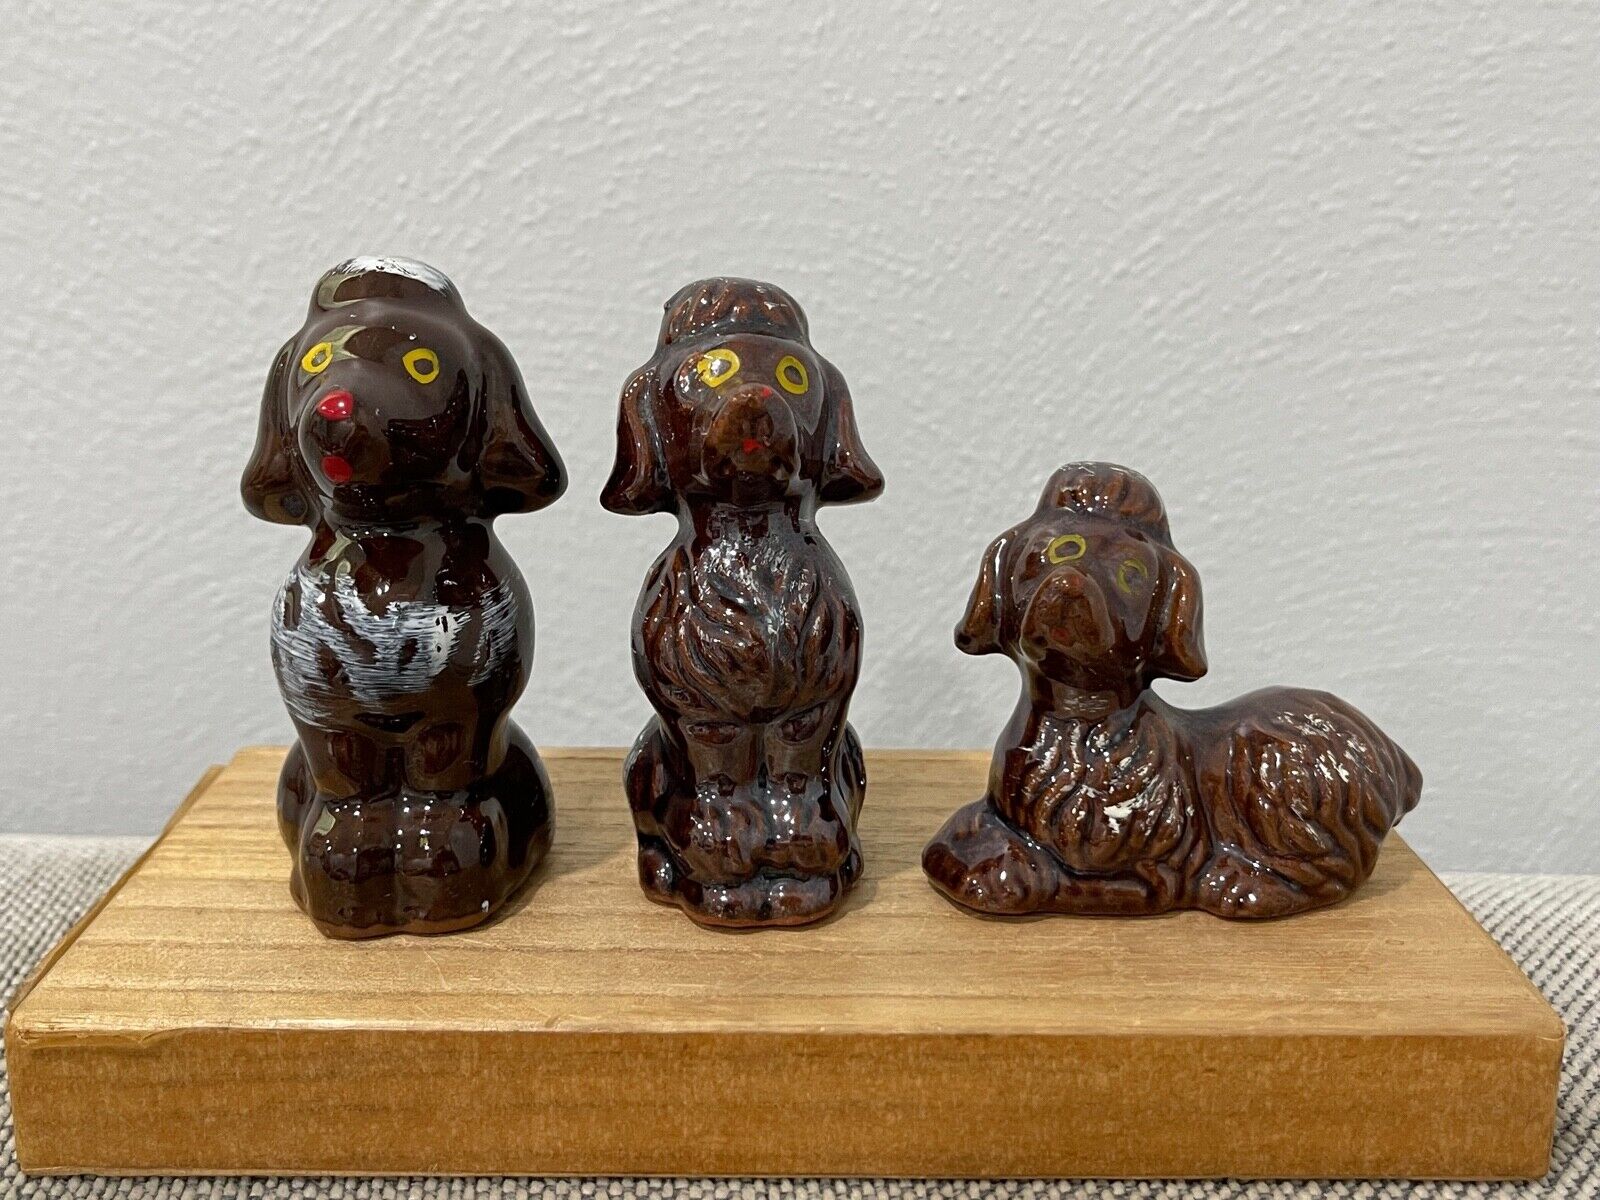 Vintage Likely Japanese Group of 3 Ceramic Brown Glazed Poodle Dog Figurines